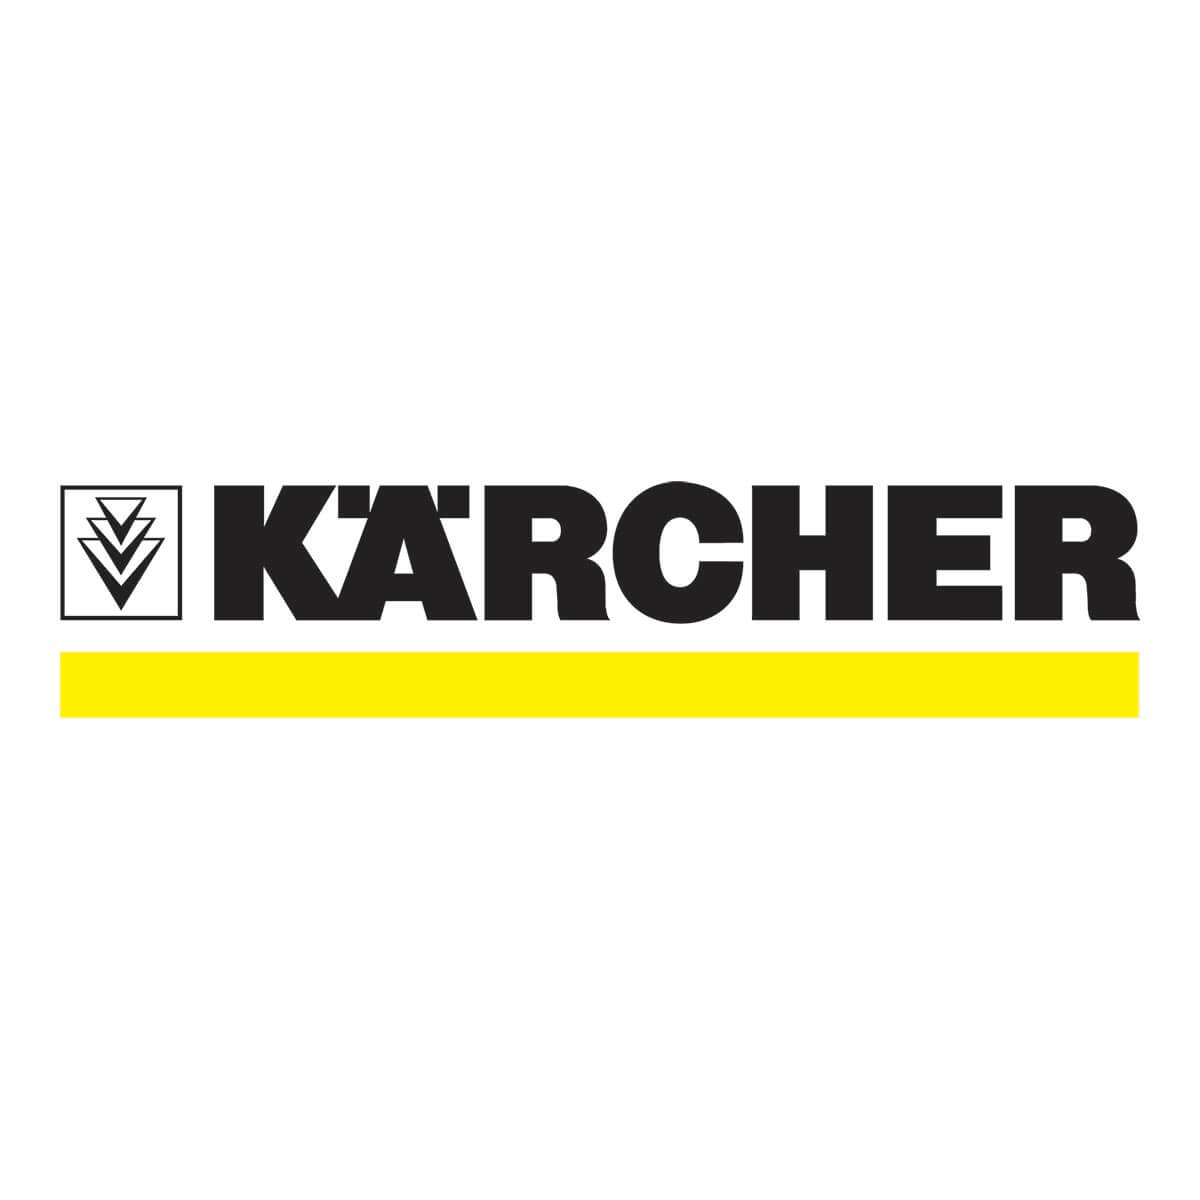 Karcher Κατηγορία Προϊόντων